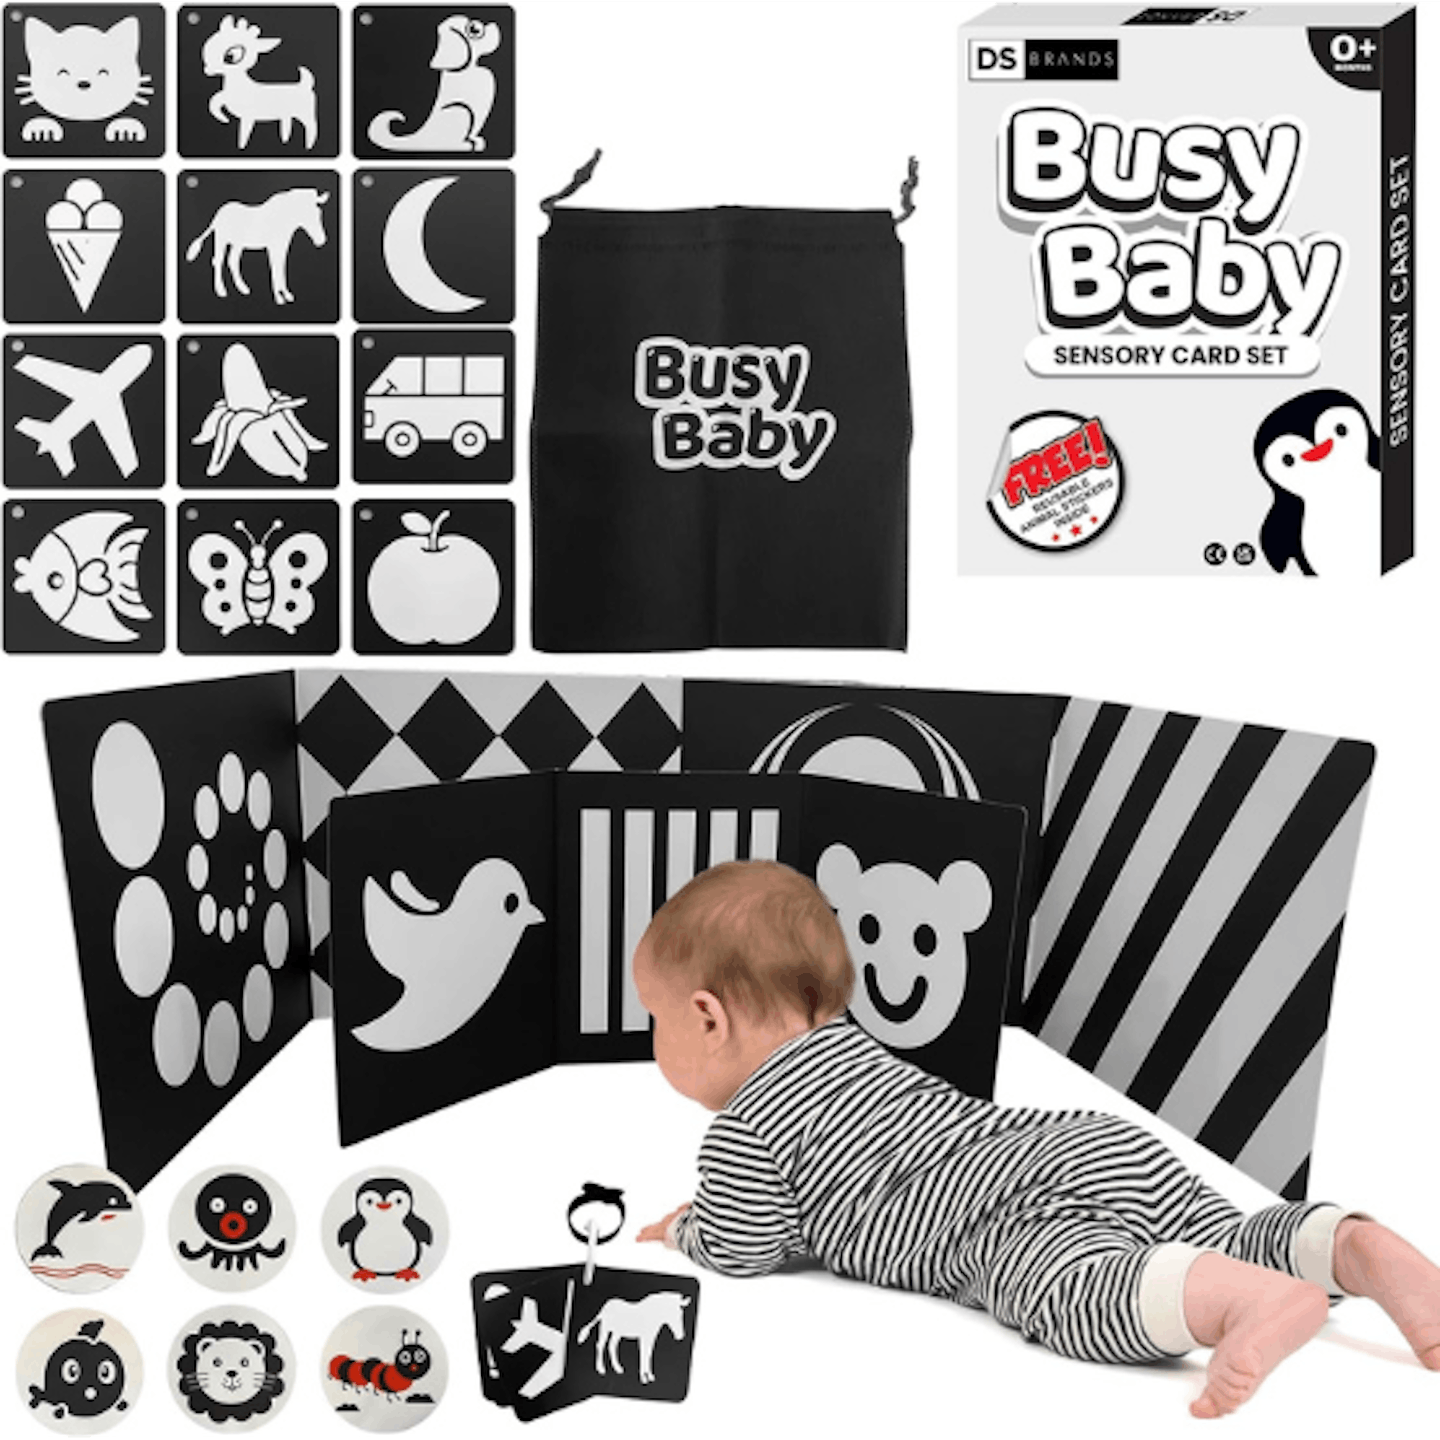 Busy baby sensory card set